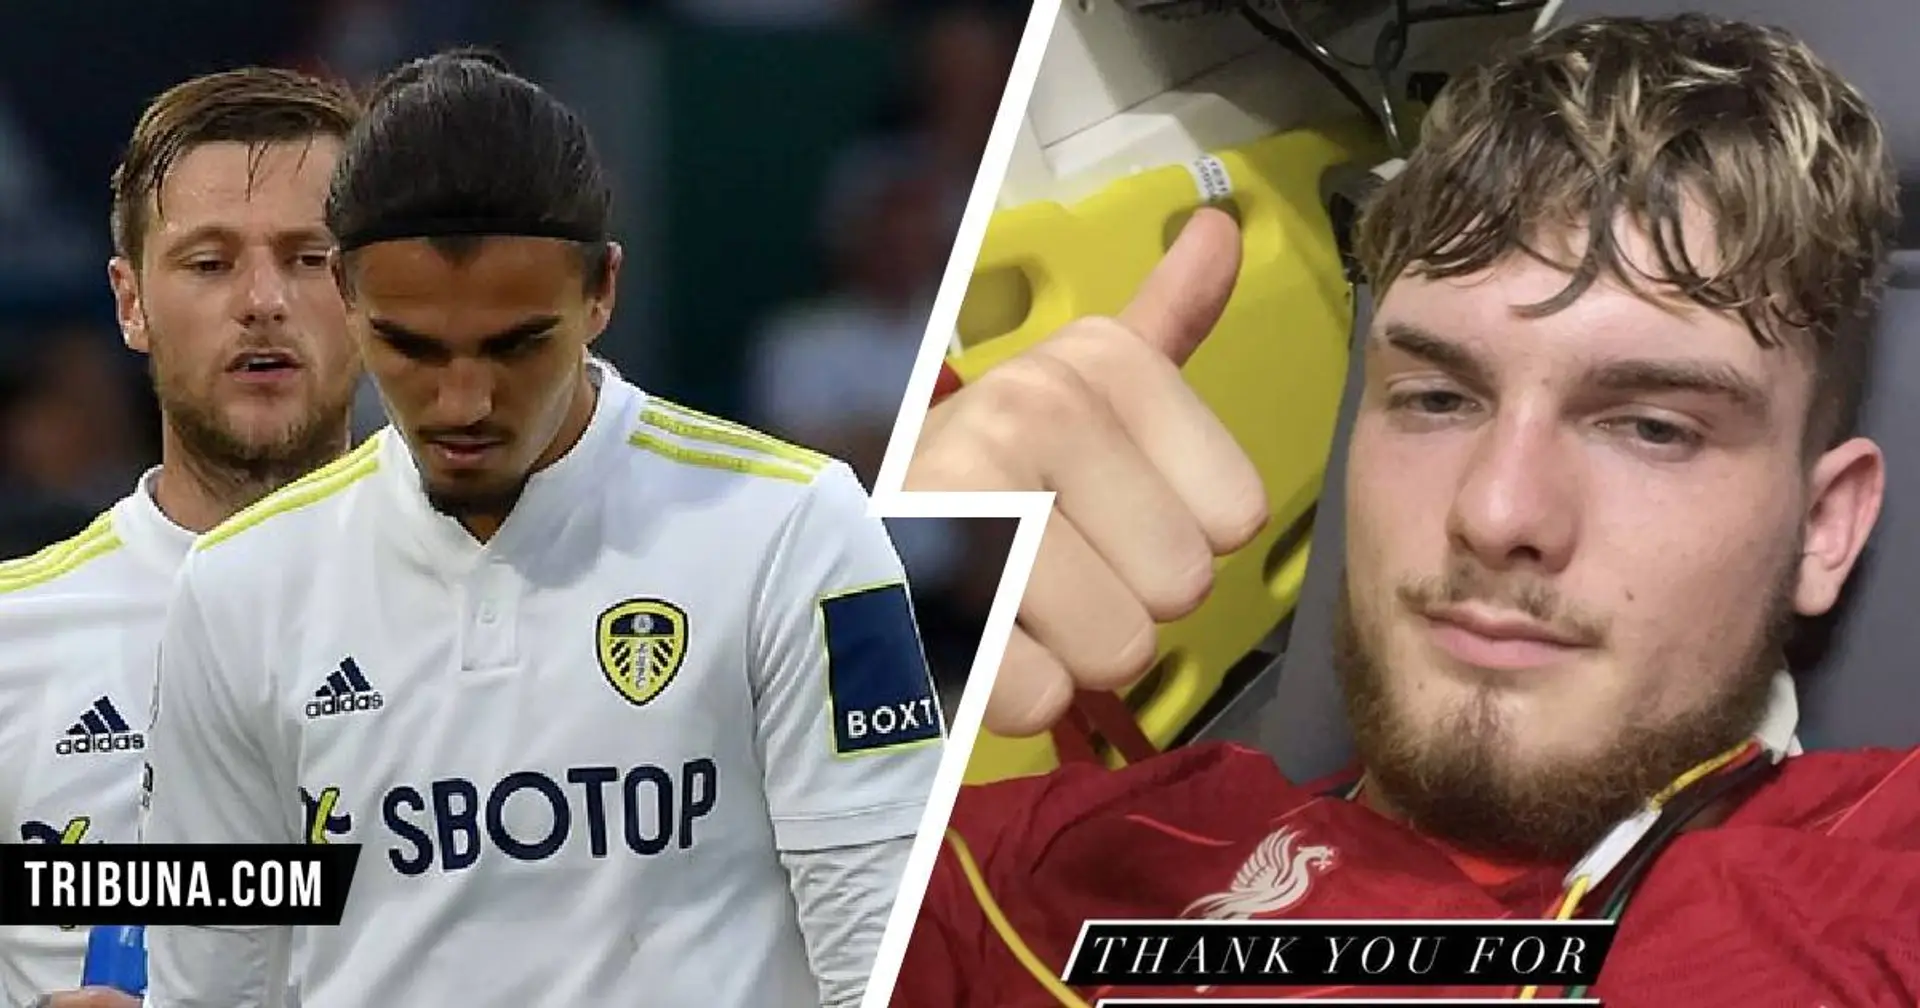 'It's wrong': Leeds' appeal to overturn Struijk's red card denied, Elliott reacts in classy fashion 